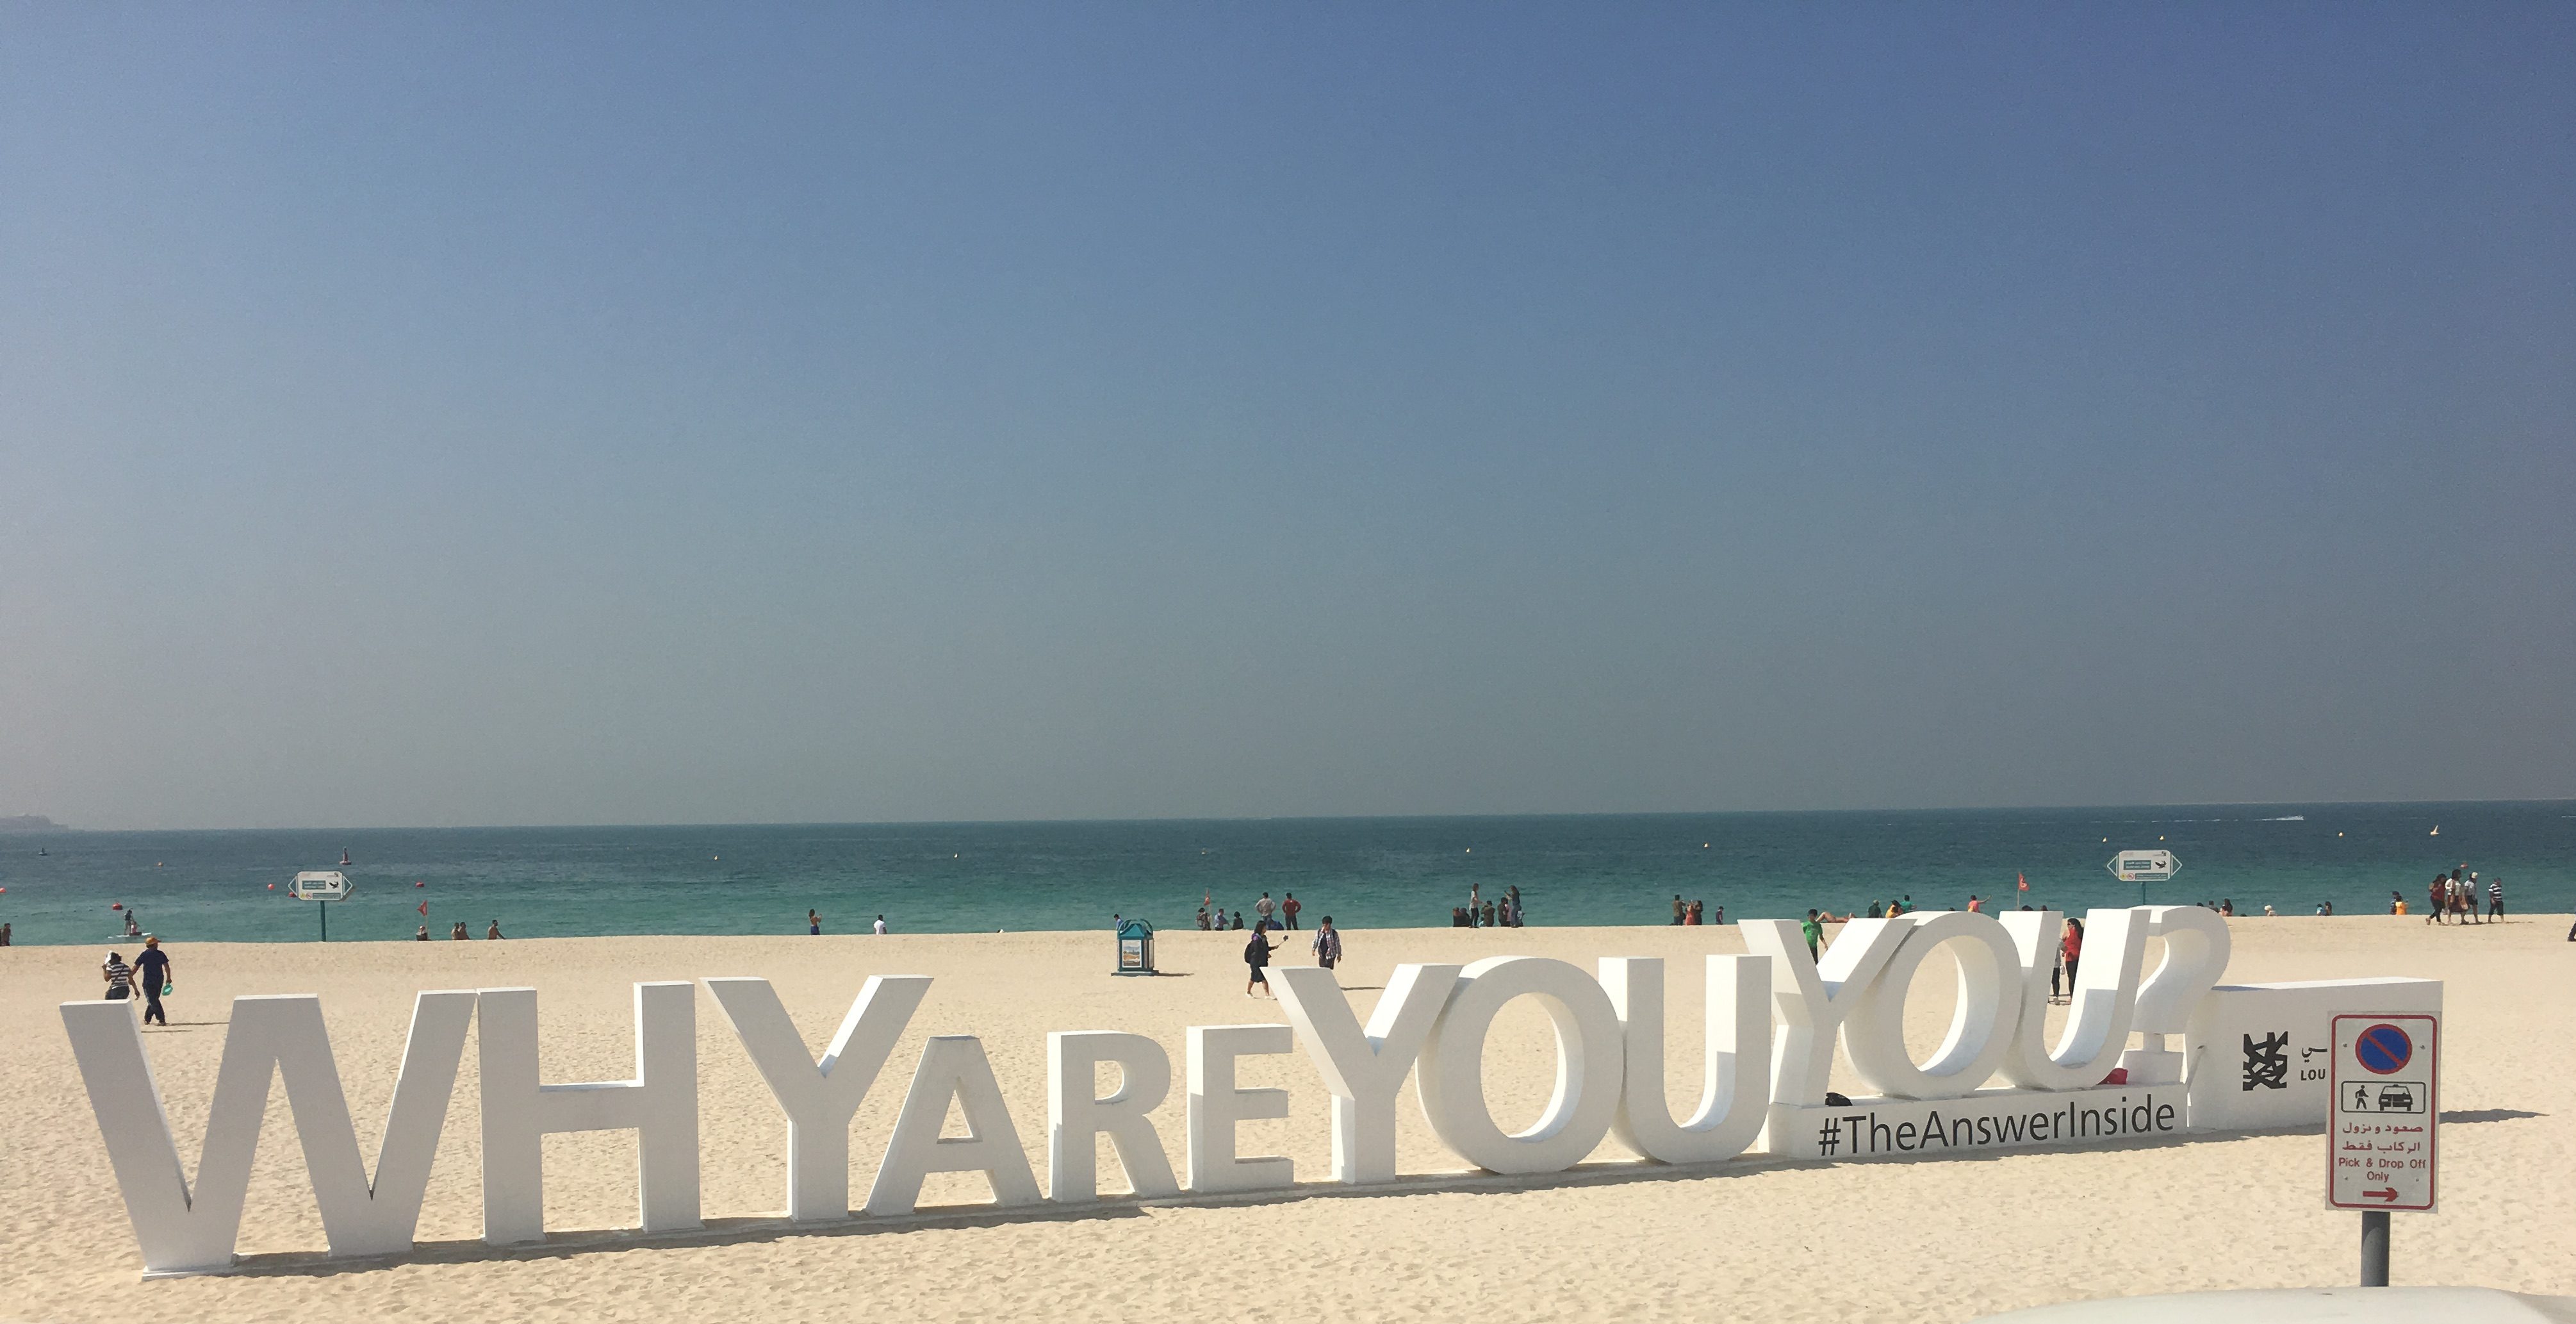 Strand beim Burj al Arab - Why are you You?